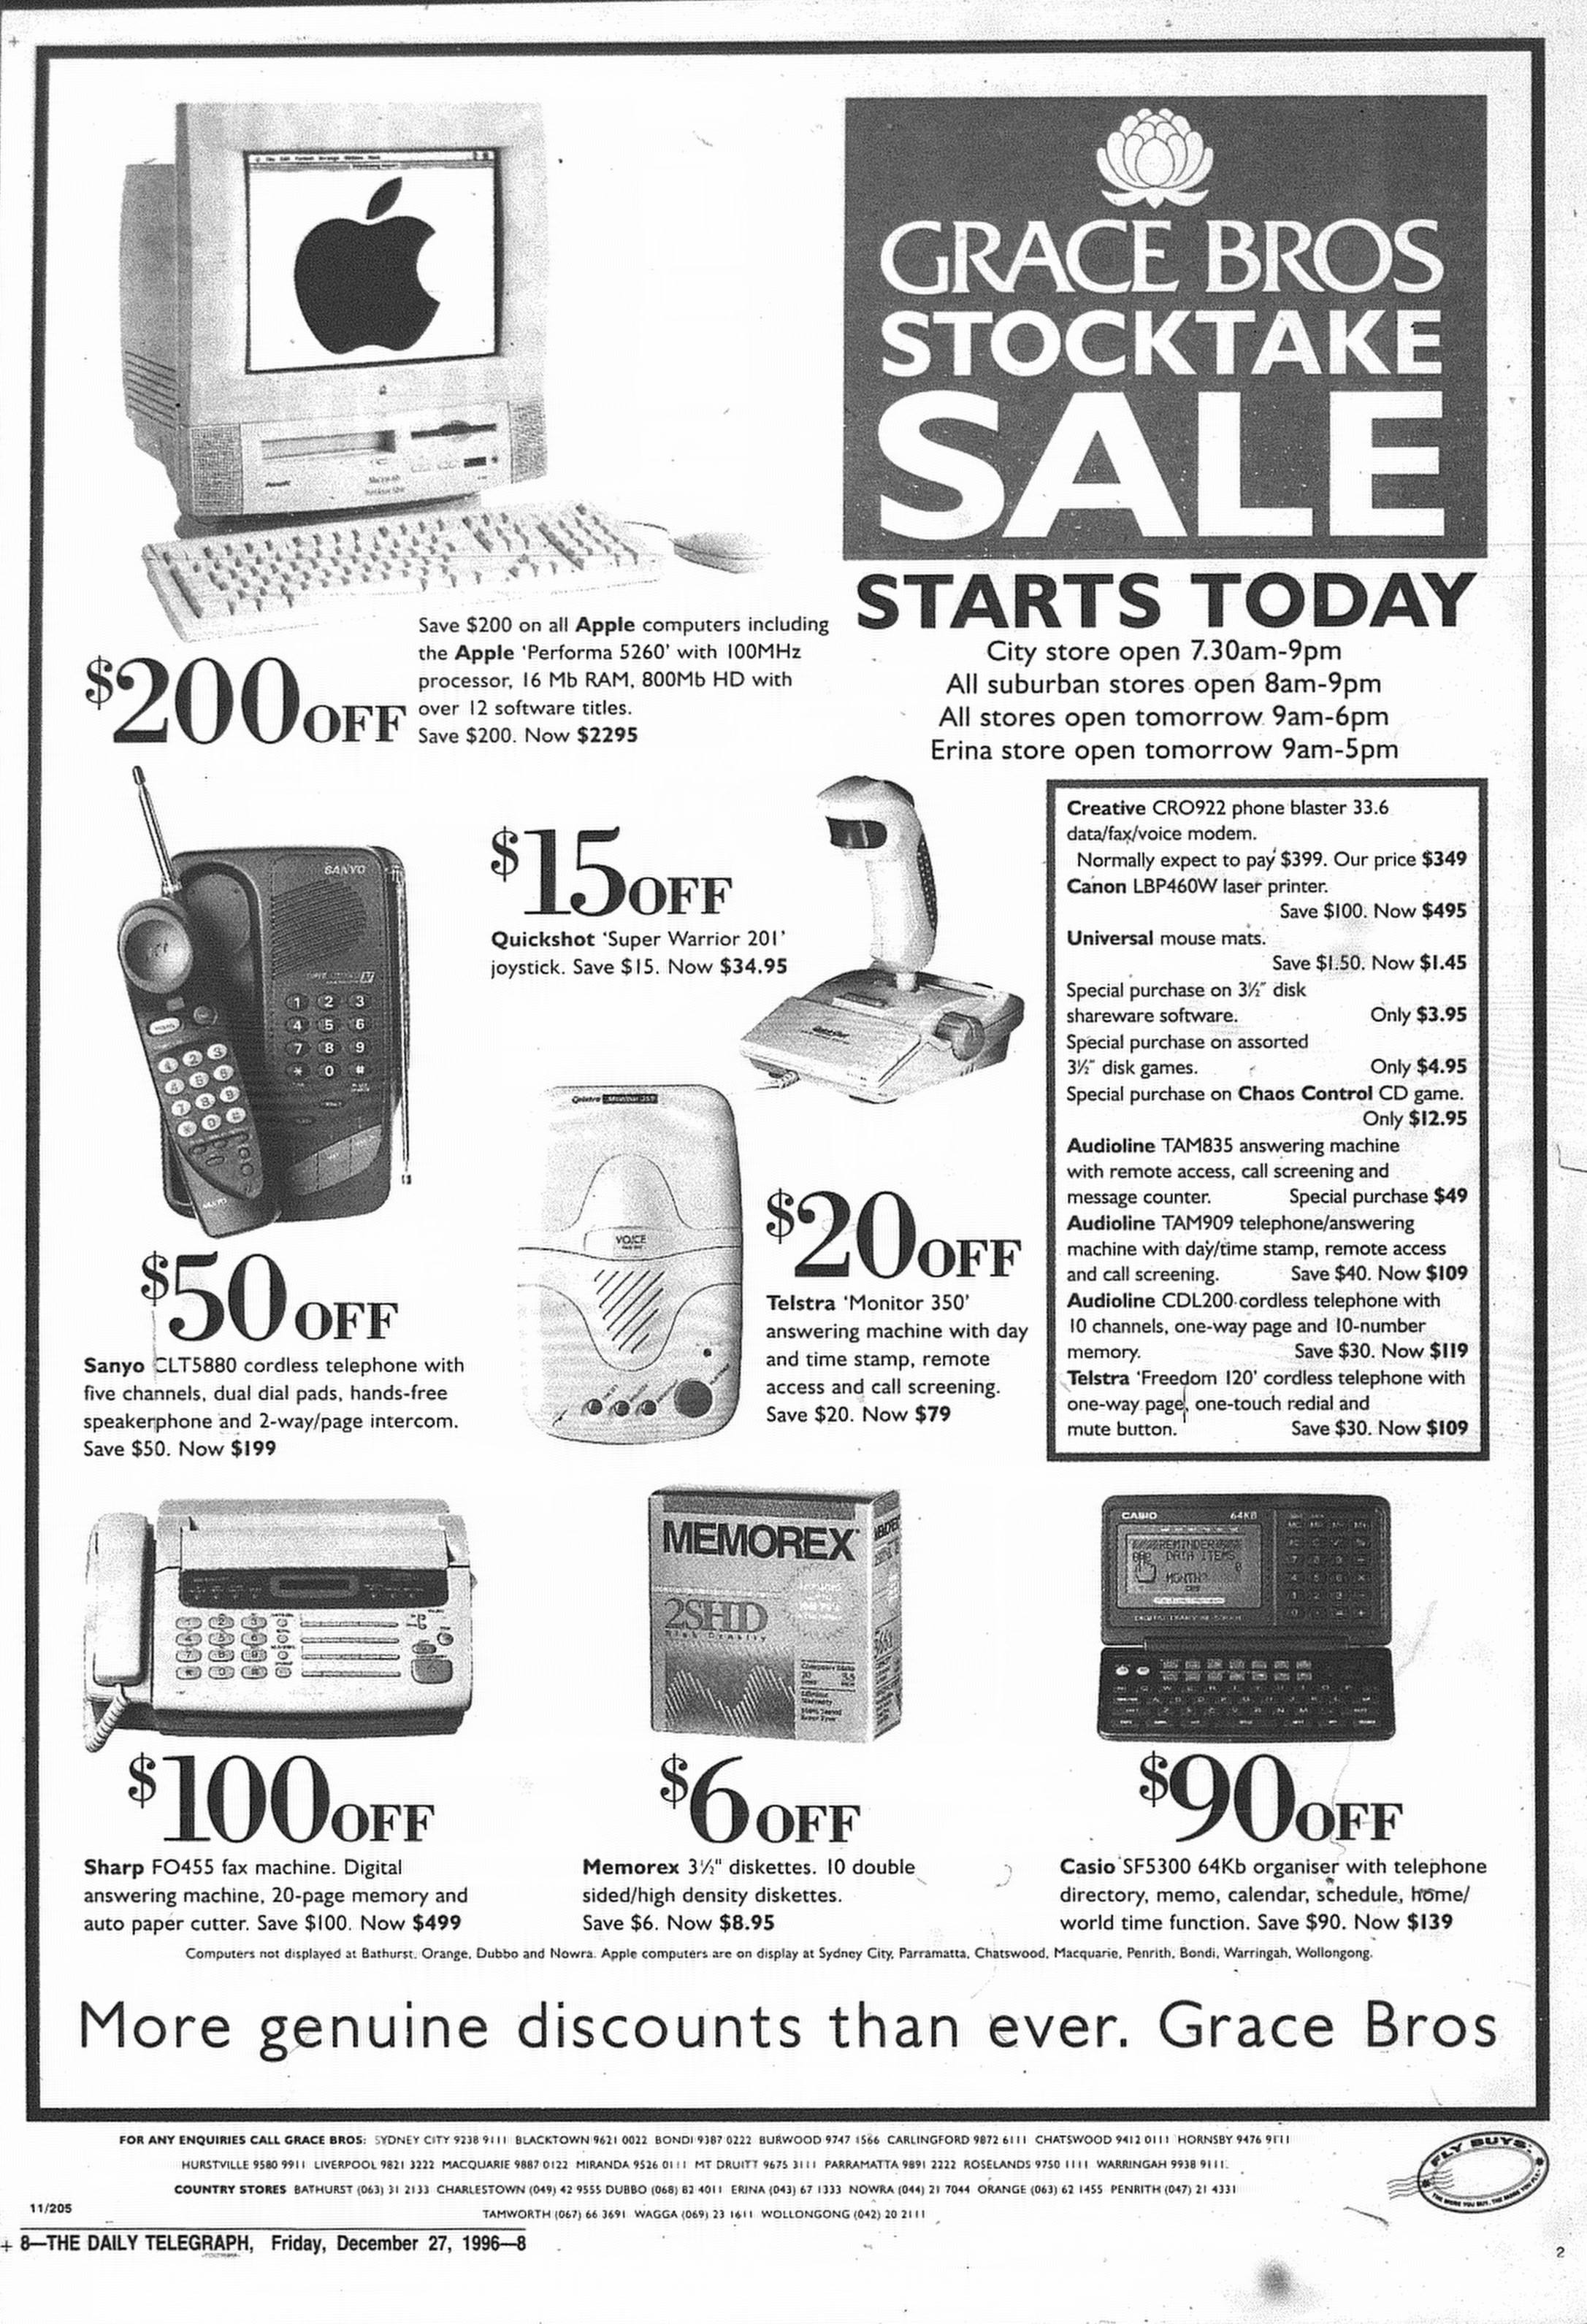 Grace Bros stocktake sale ad December 27 1996 daily telegraph 8